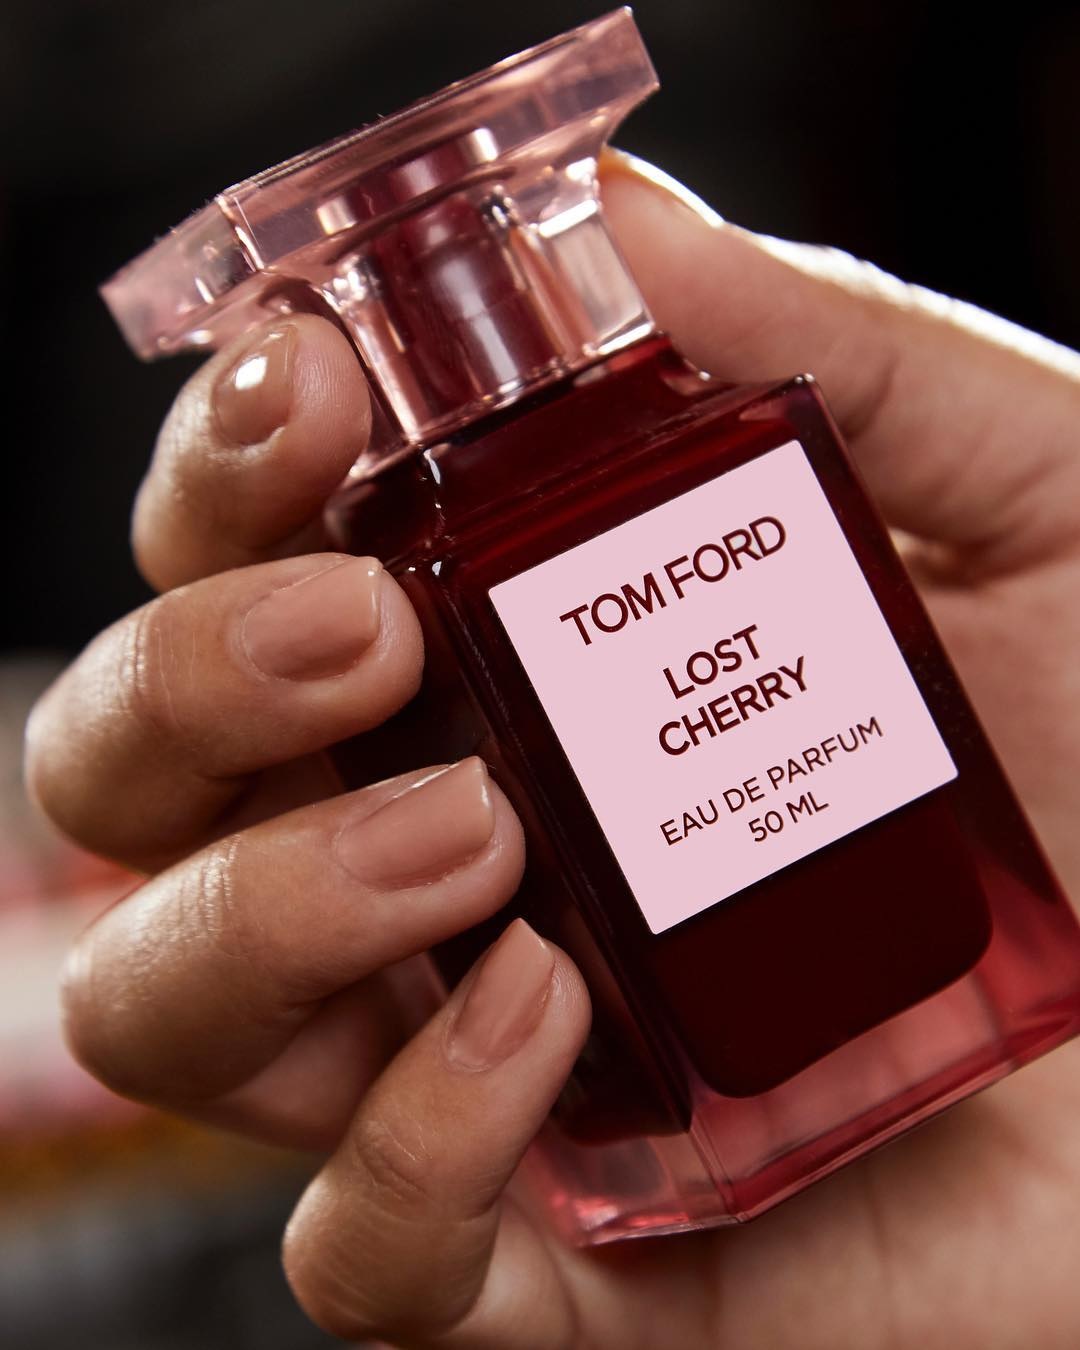 Lost Cherry Tom Ford عطر - a جديد fragrance للرجال و النساء 2018